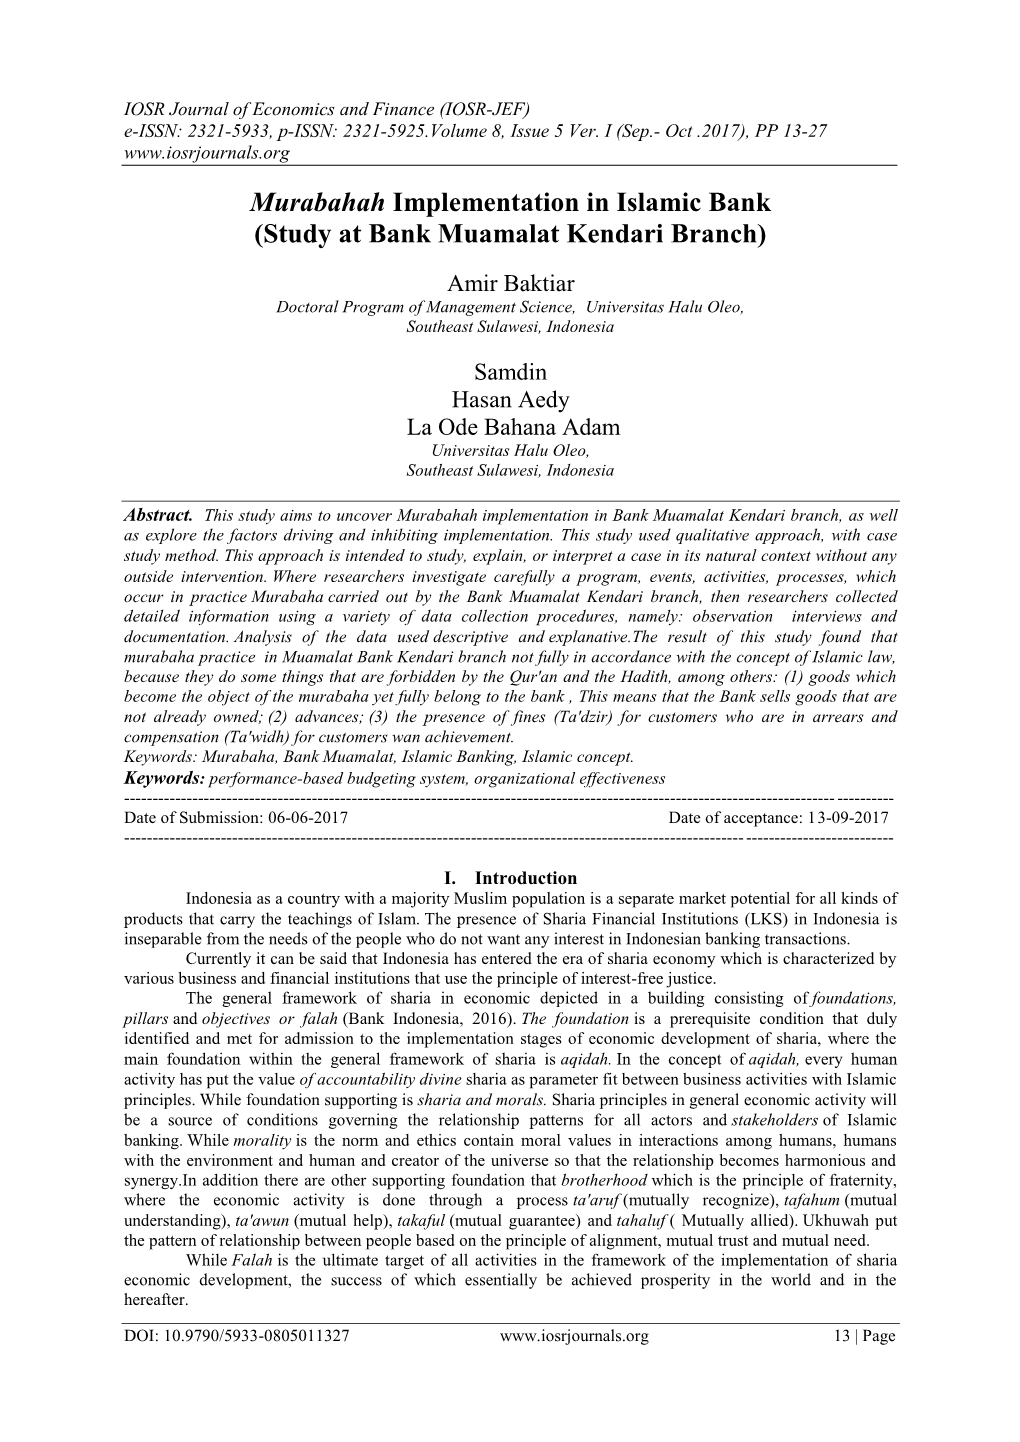 Murabahah Implementation in Islamic Bank (Study at Bank Muamalat Kendari Branch)